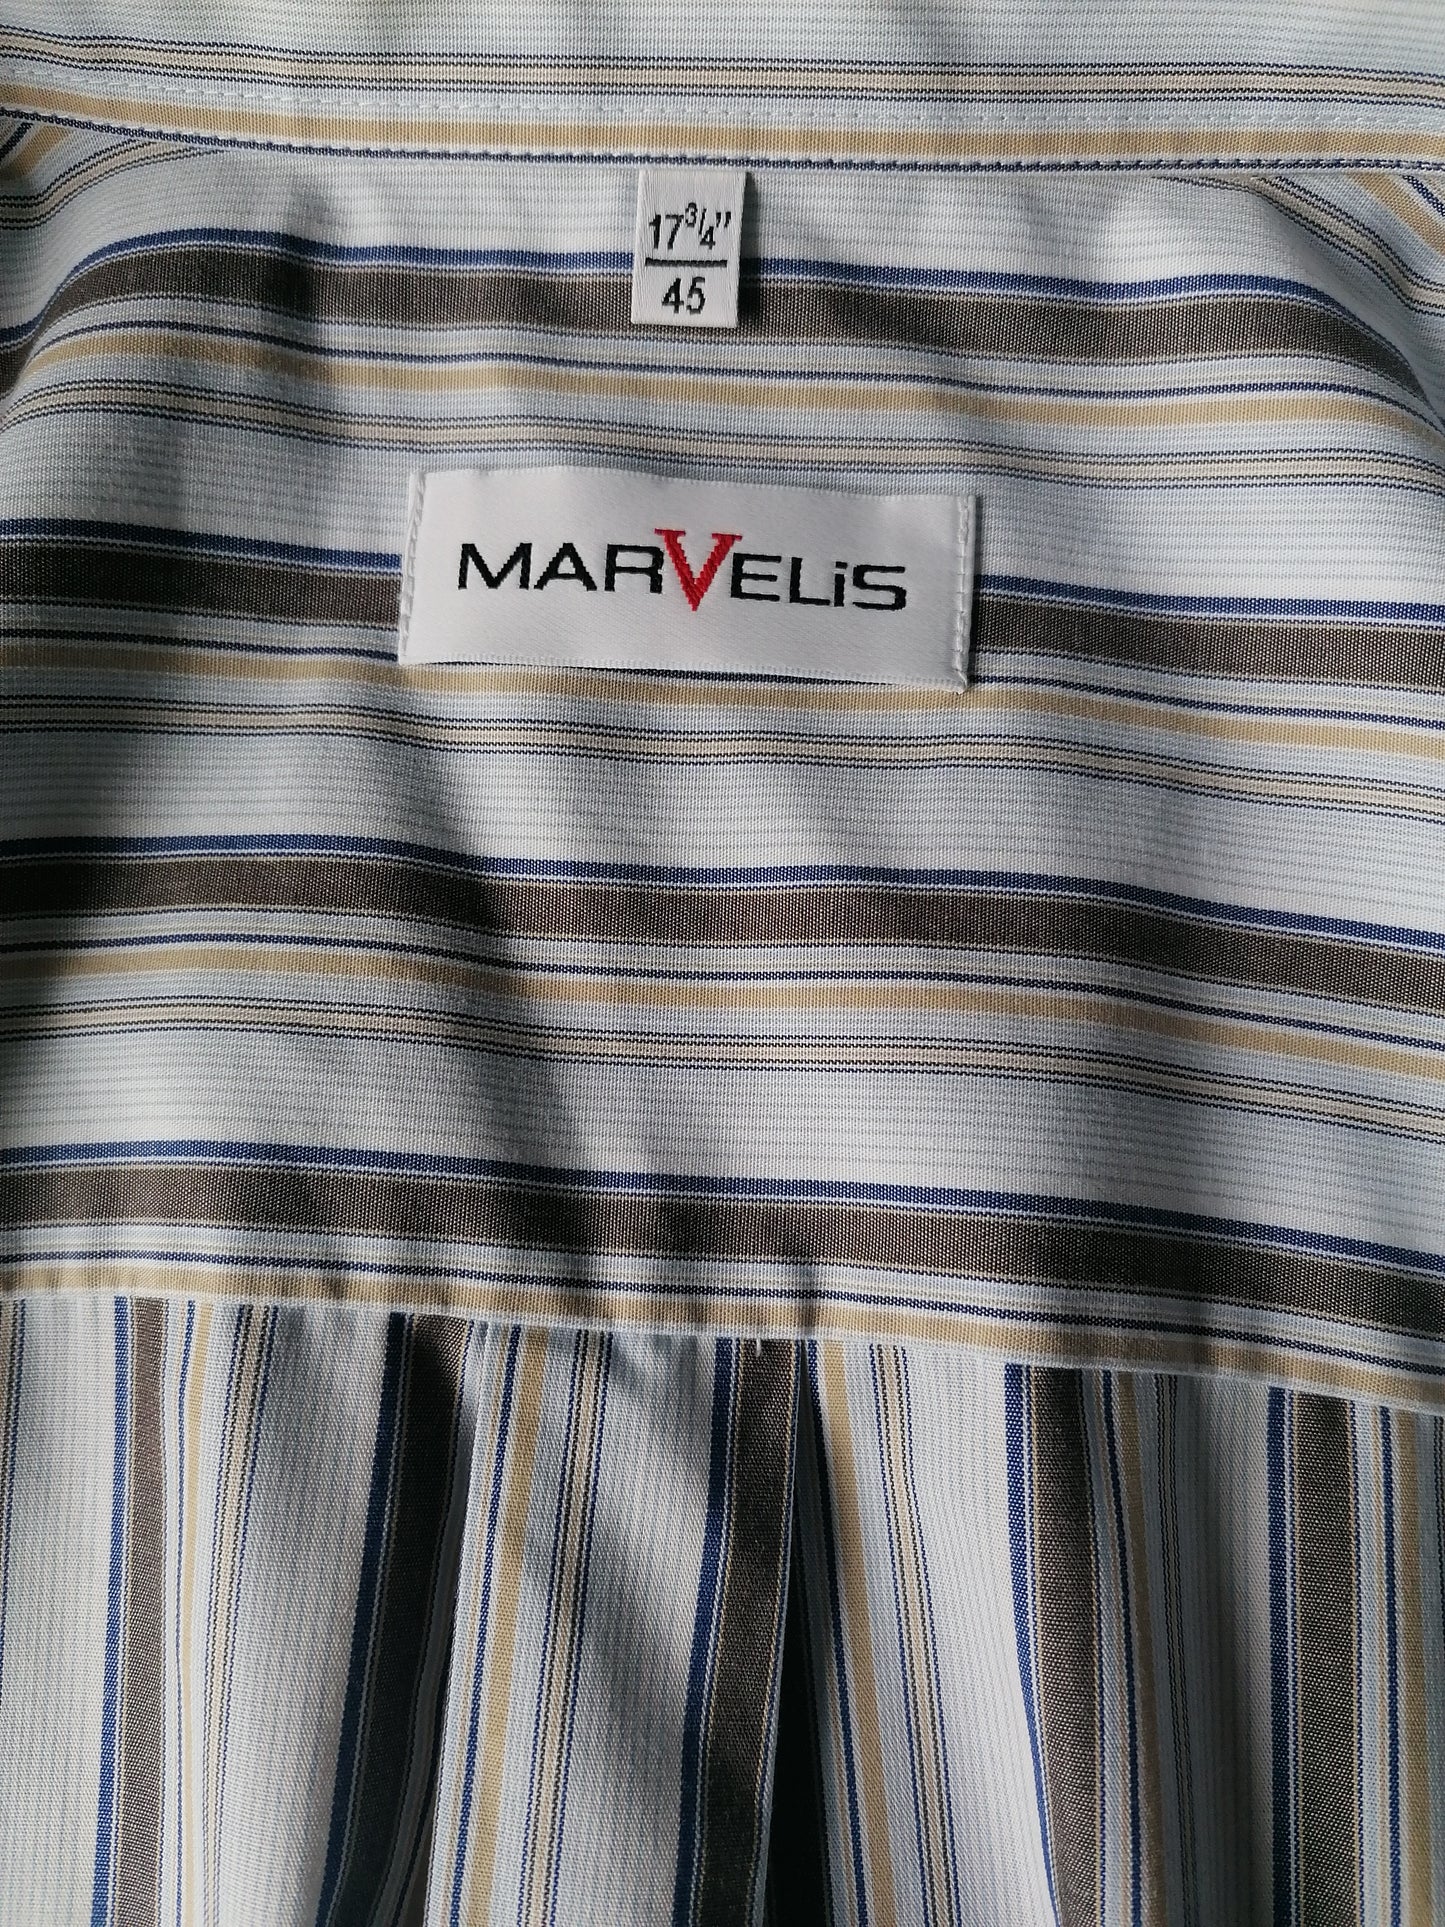 Marvelis shirt. Brown blue yellow white striped. Size 45 / 2XL >> 3XL. falls more spacious